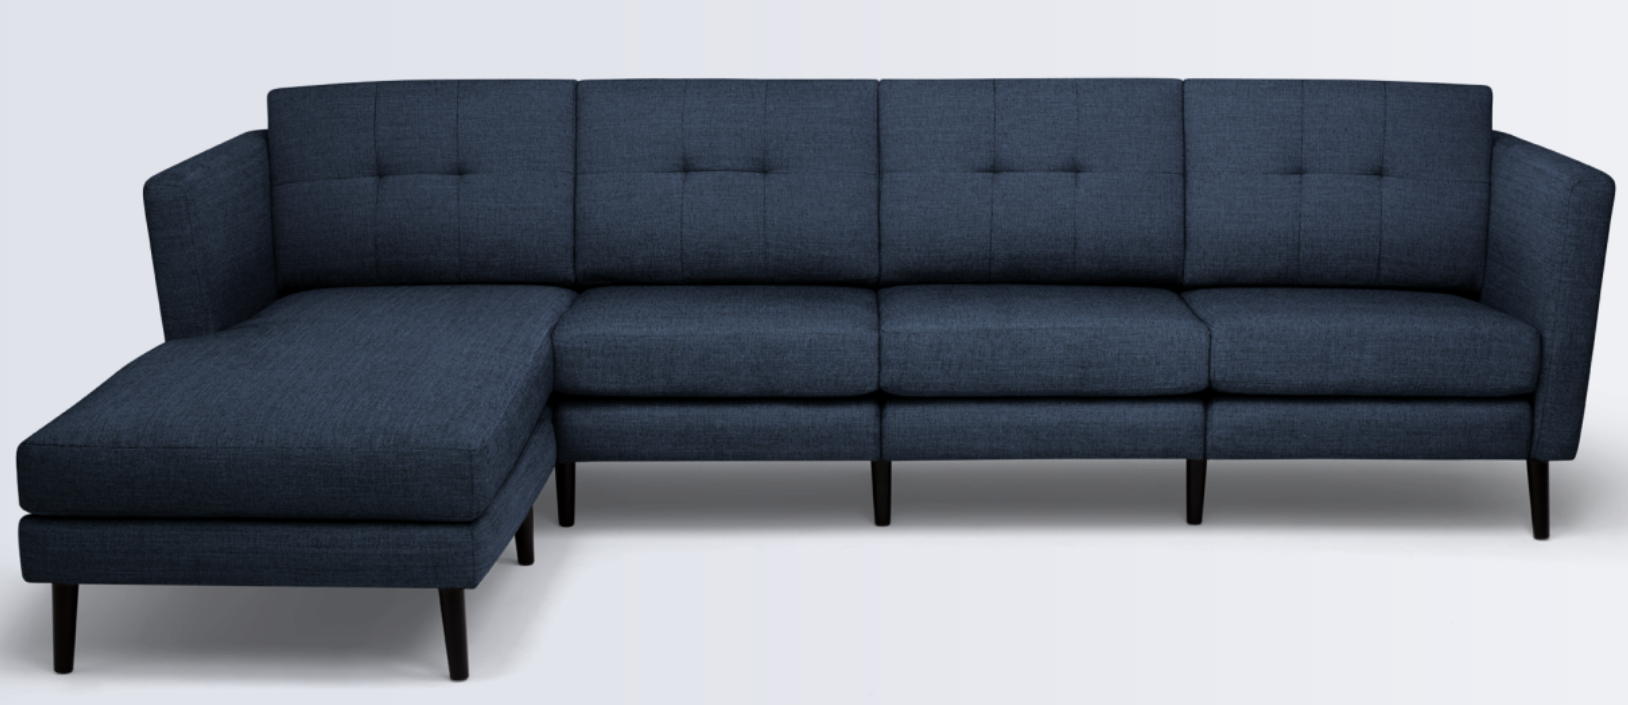 Block Nomad Sofa Sectional - Walnut leg color - Image 1